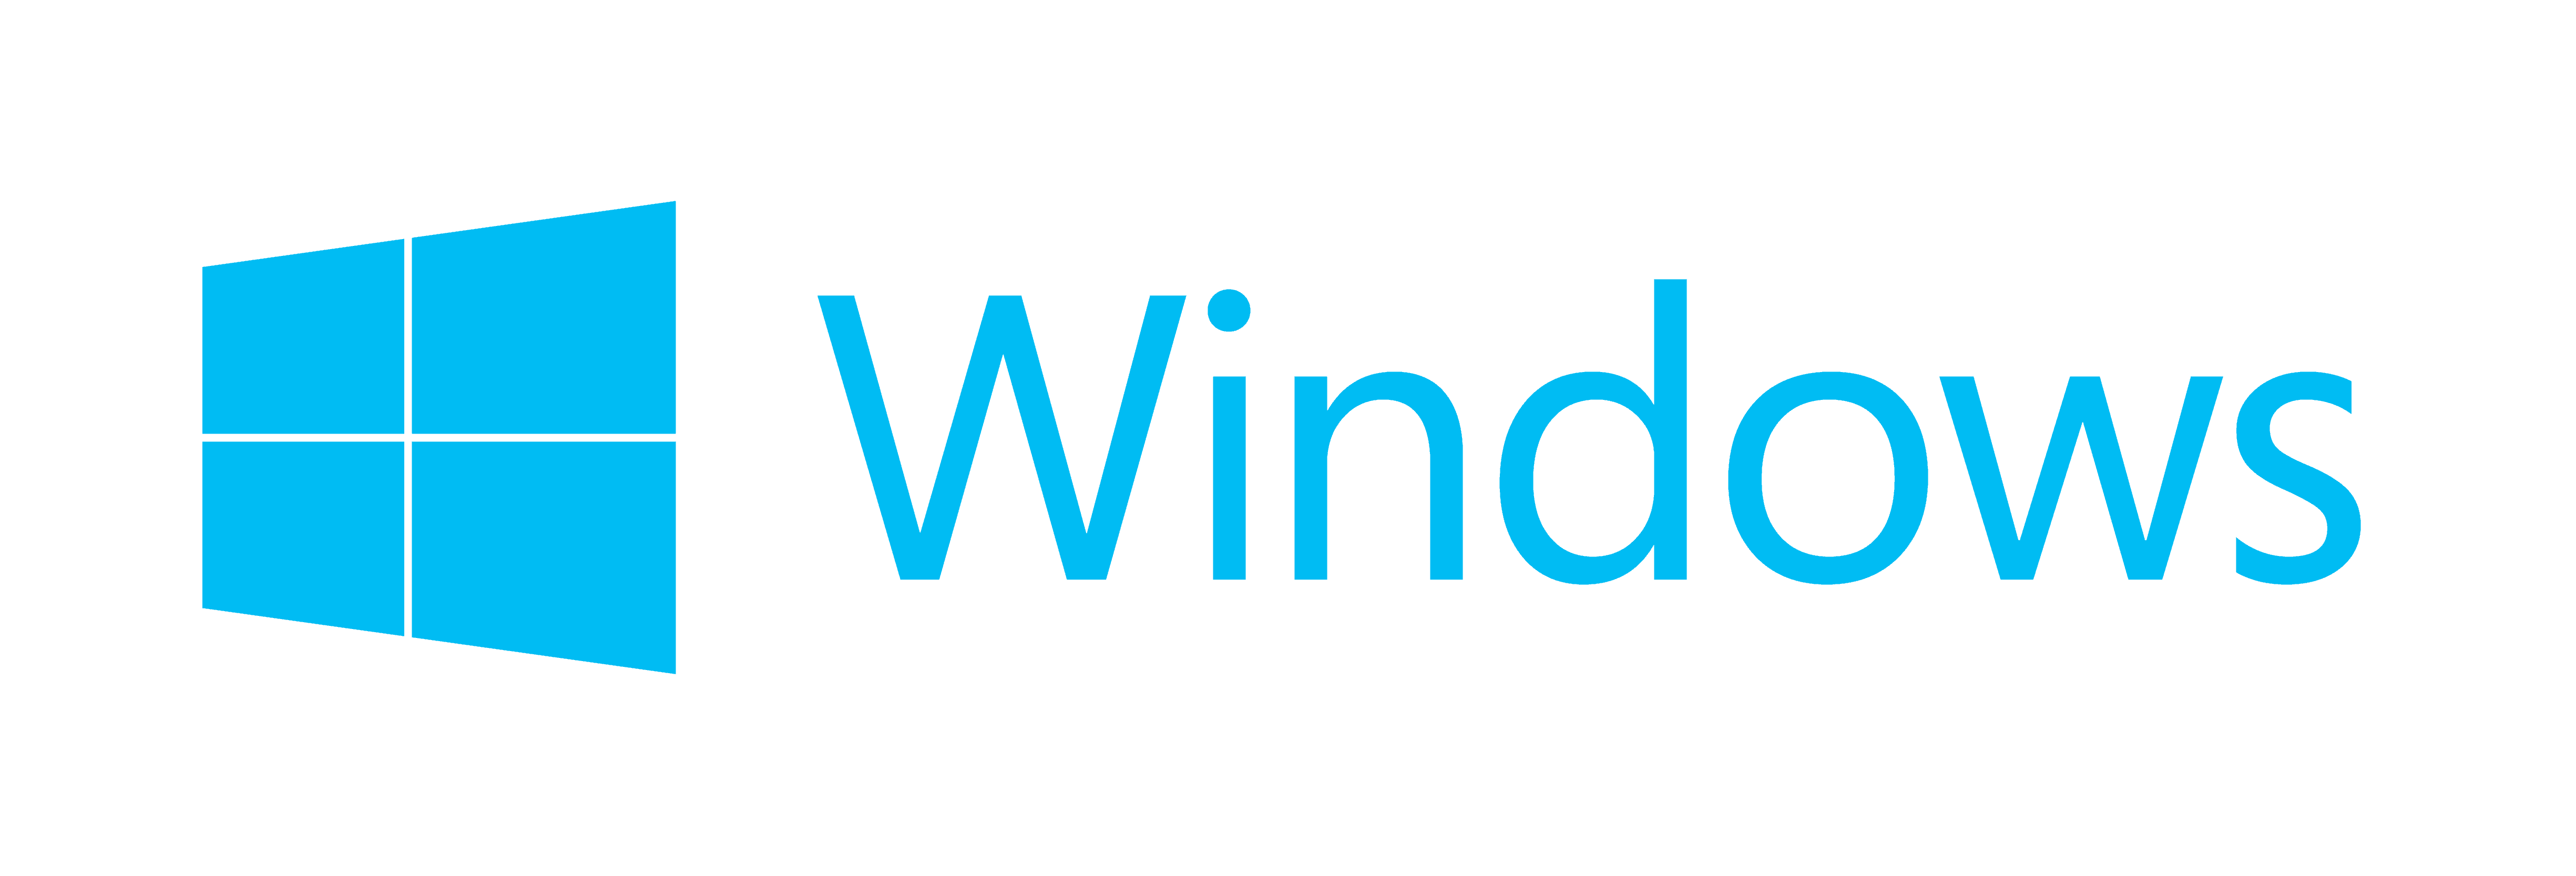 Free Microsoft Windows licenses